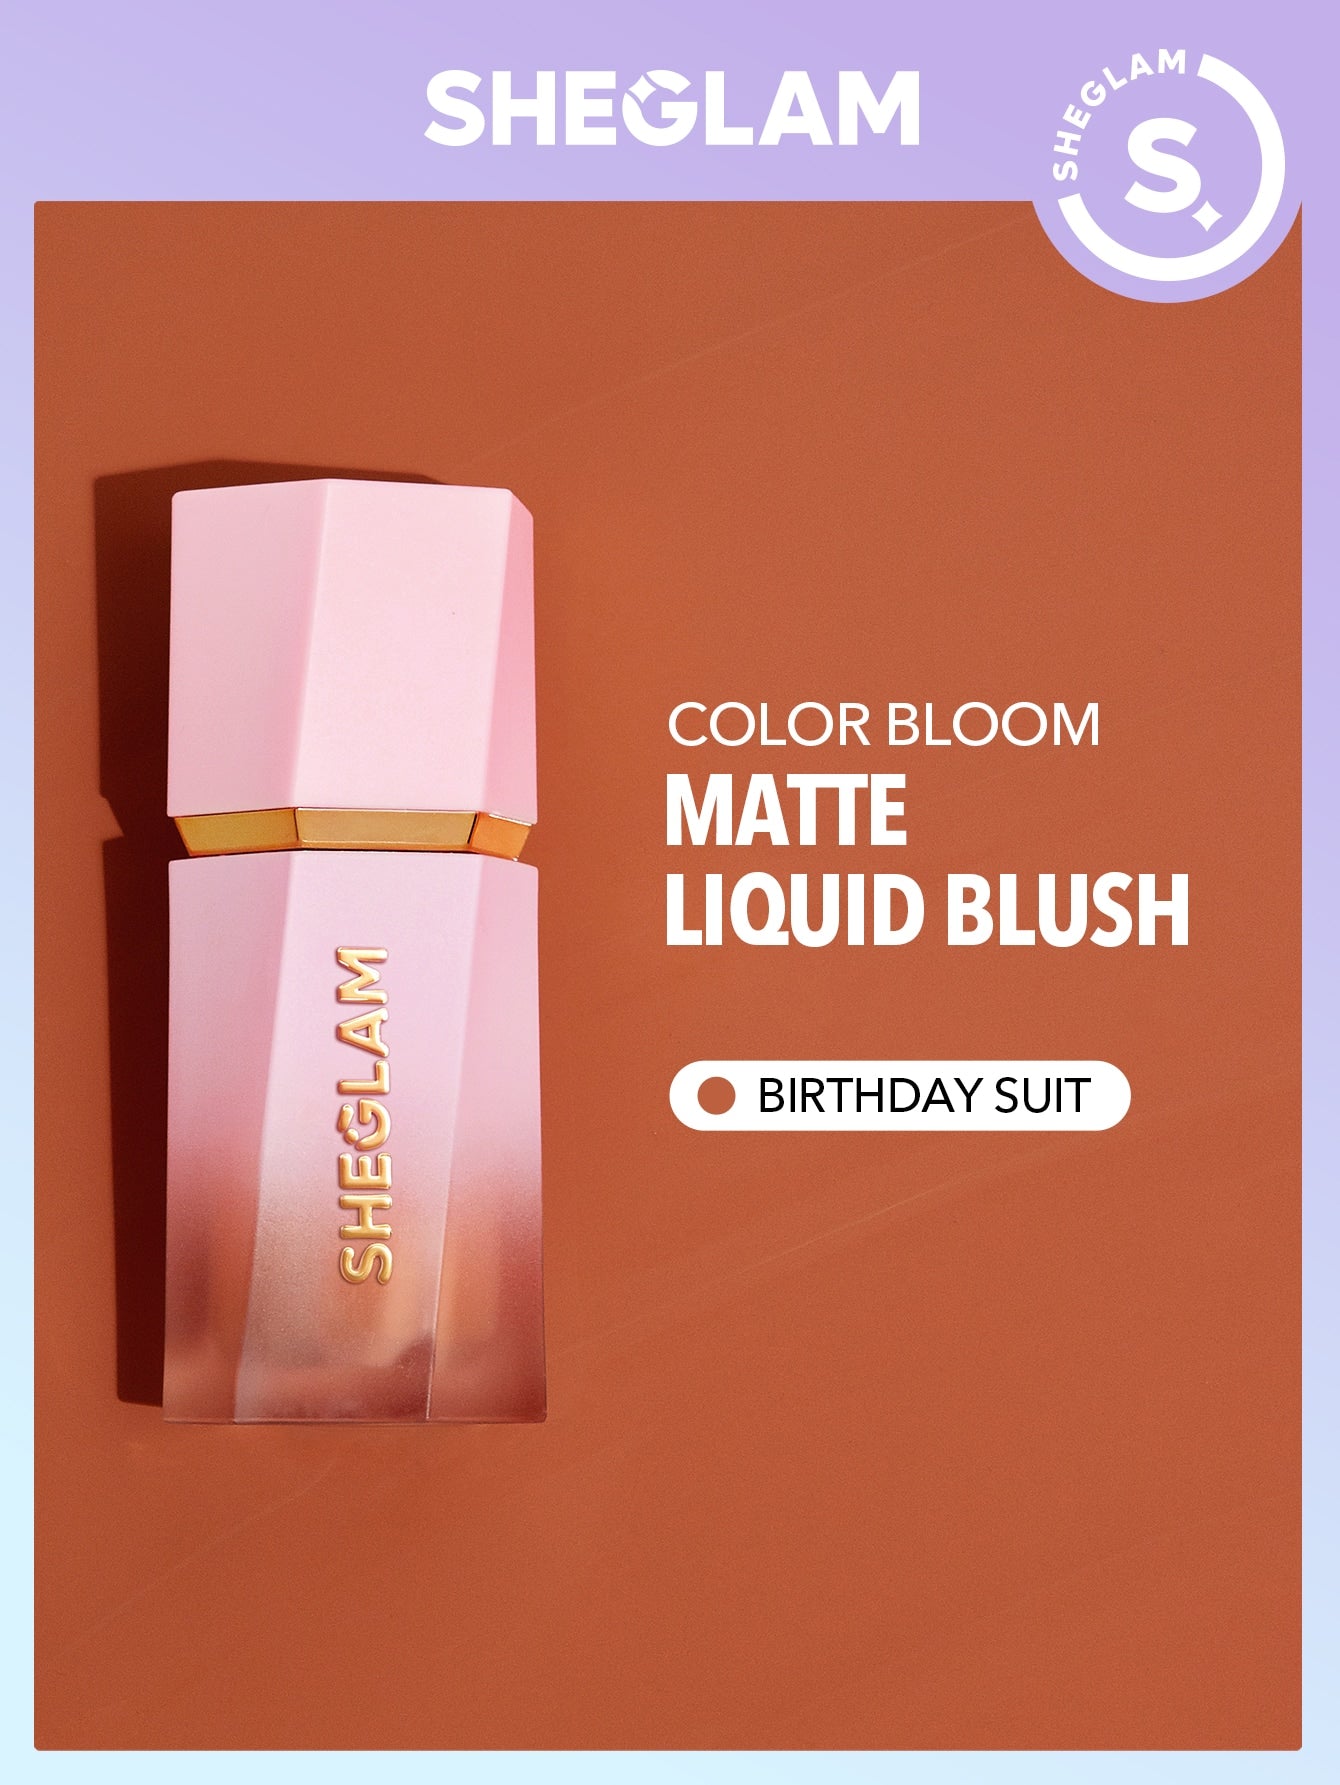 SHEGLAM Color Bloom Liquid Blush Matte Finish Love Cake